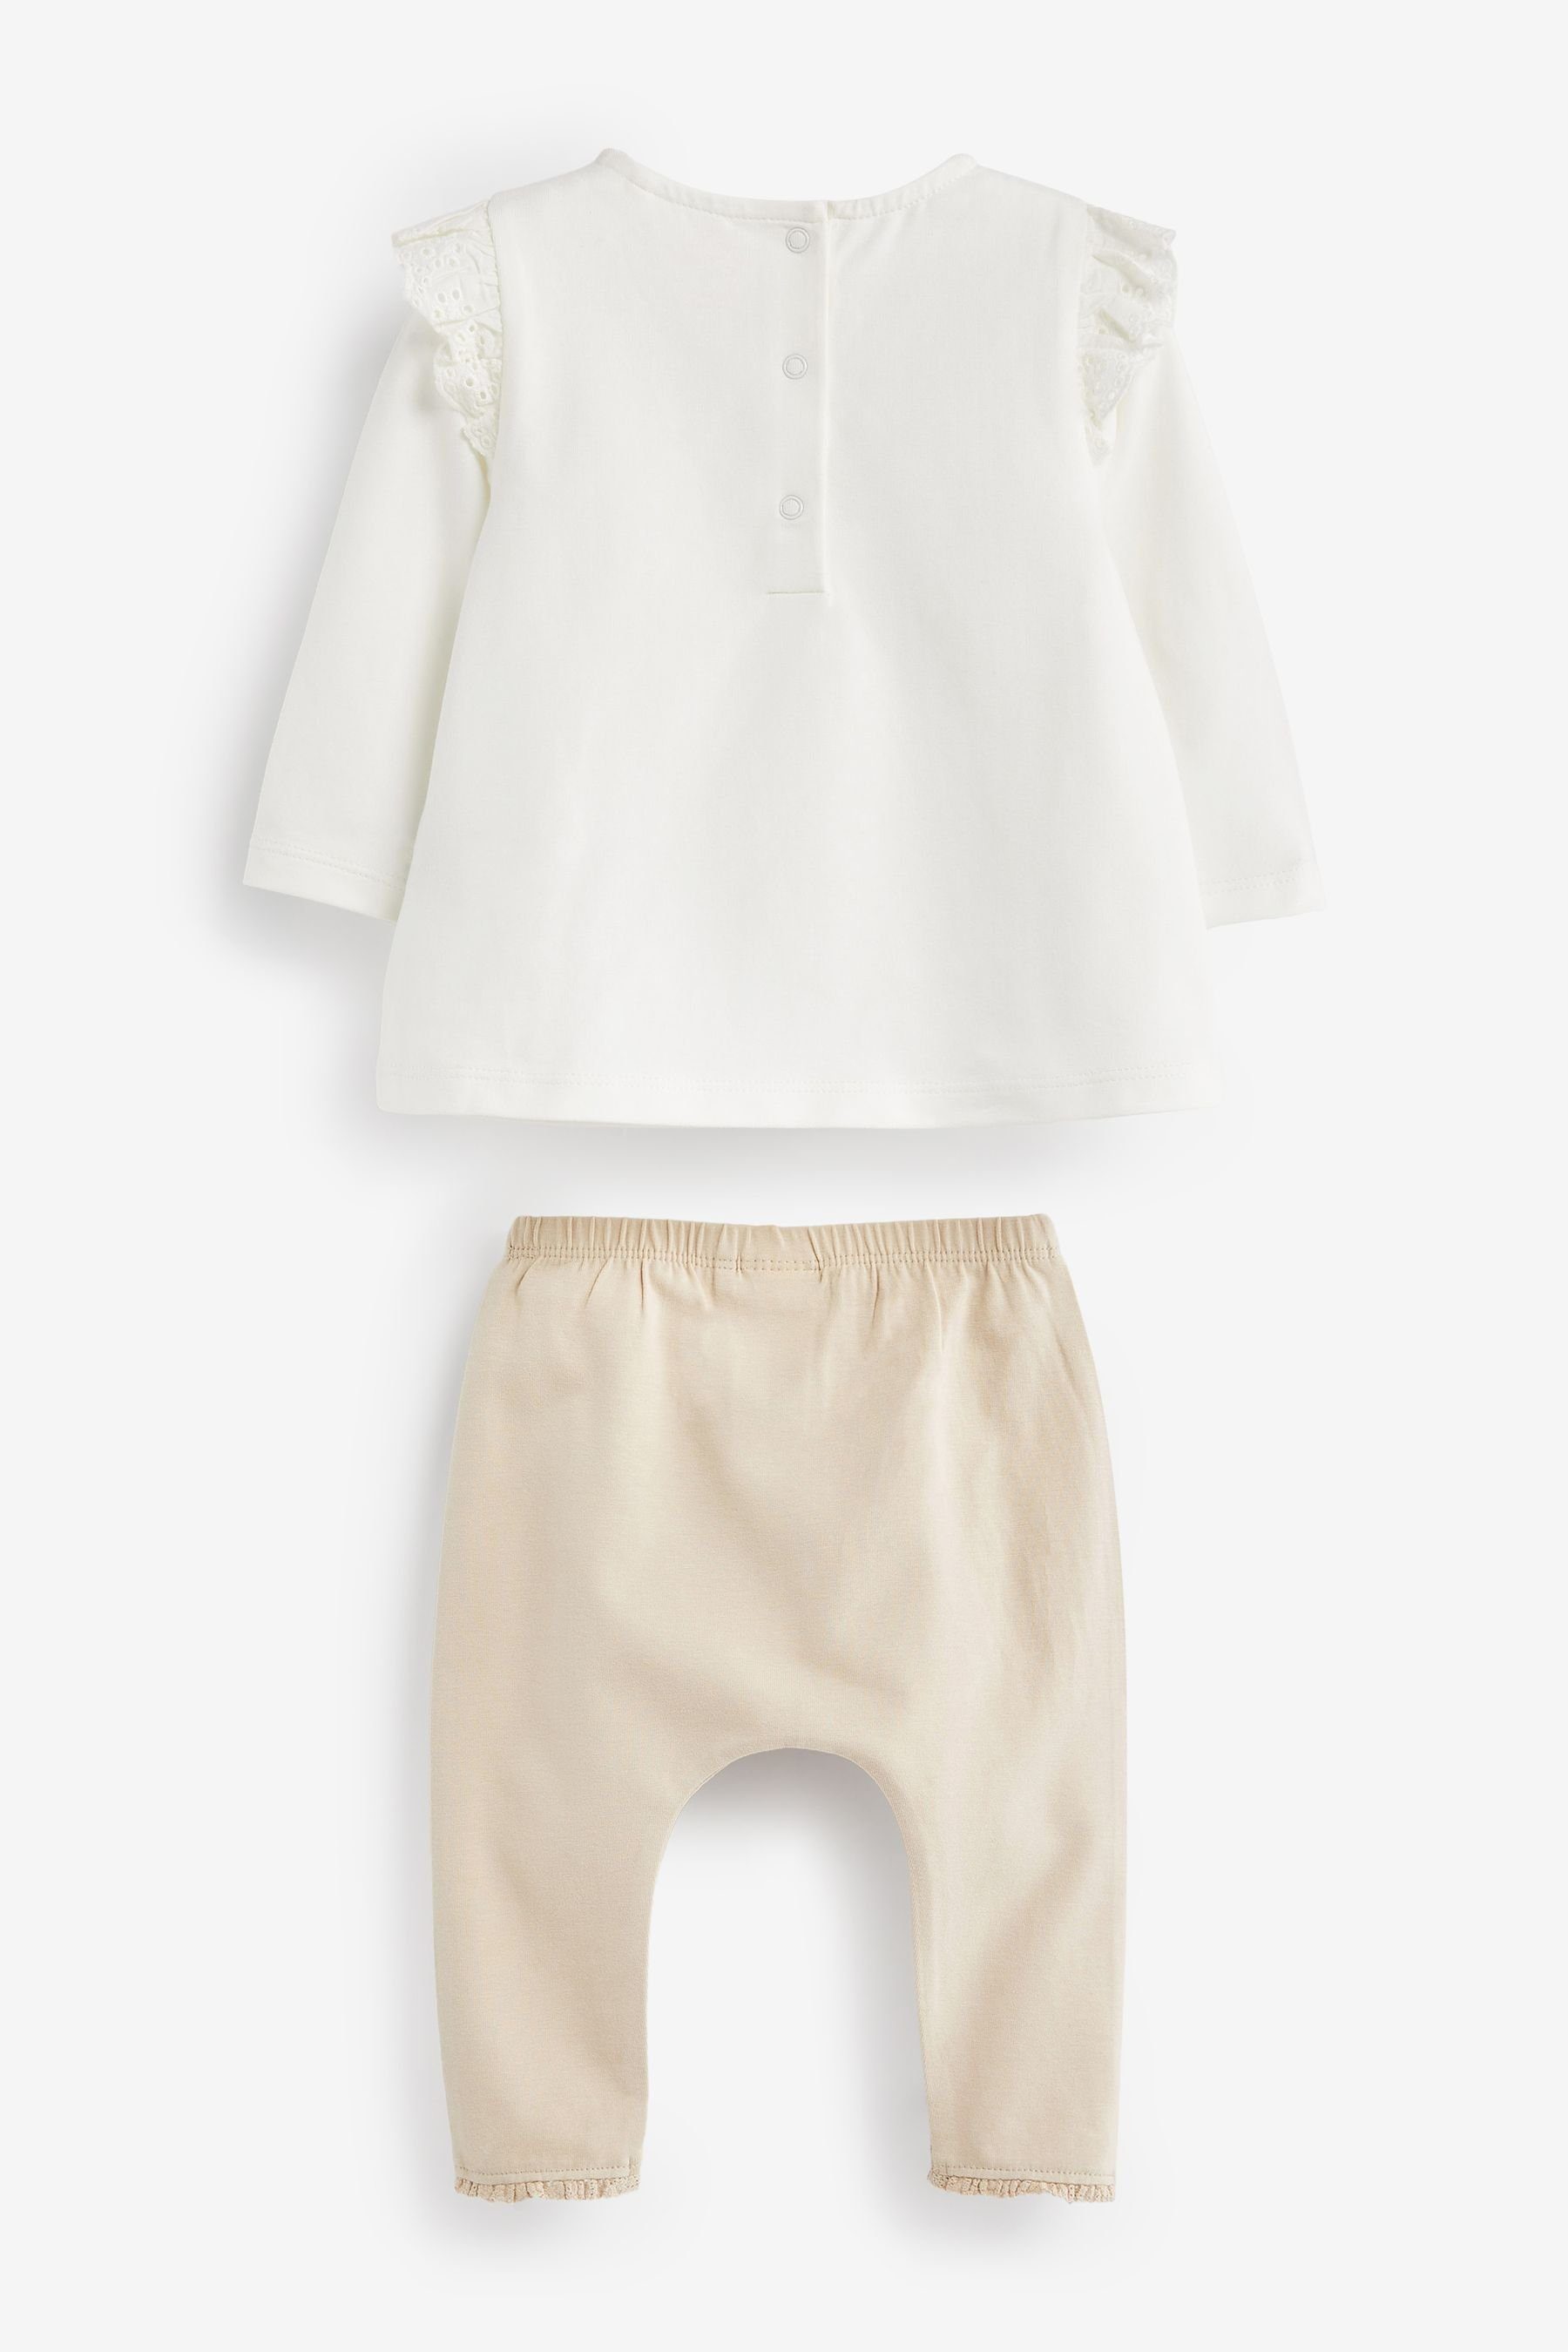 Next Shirt & Floral Baby-Set Leggings T-Shirts Bunny Pink (6-tlg) Pale Leggings und im 6-teiligen